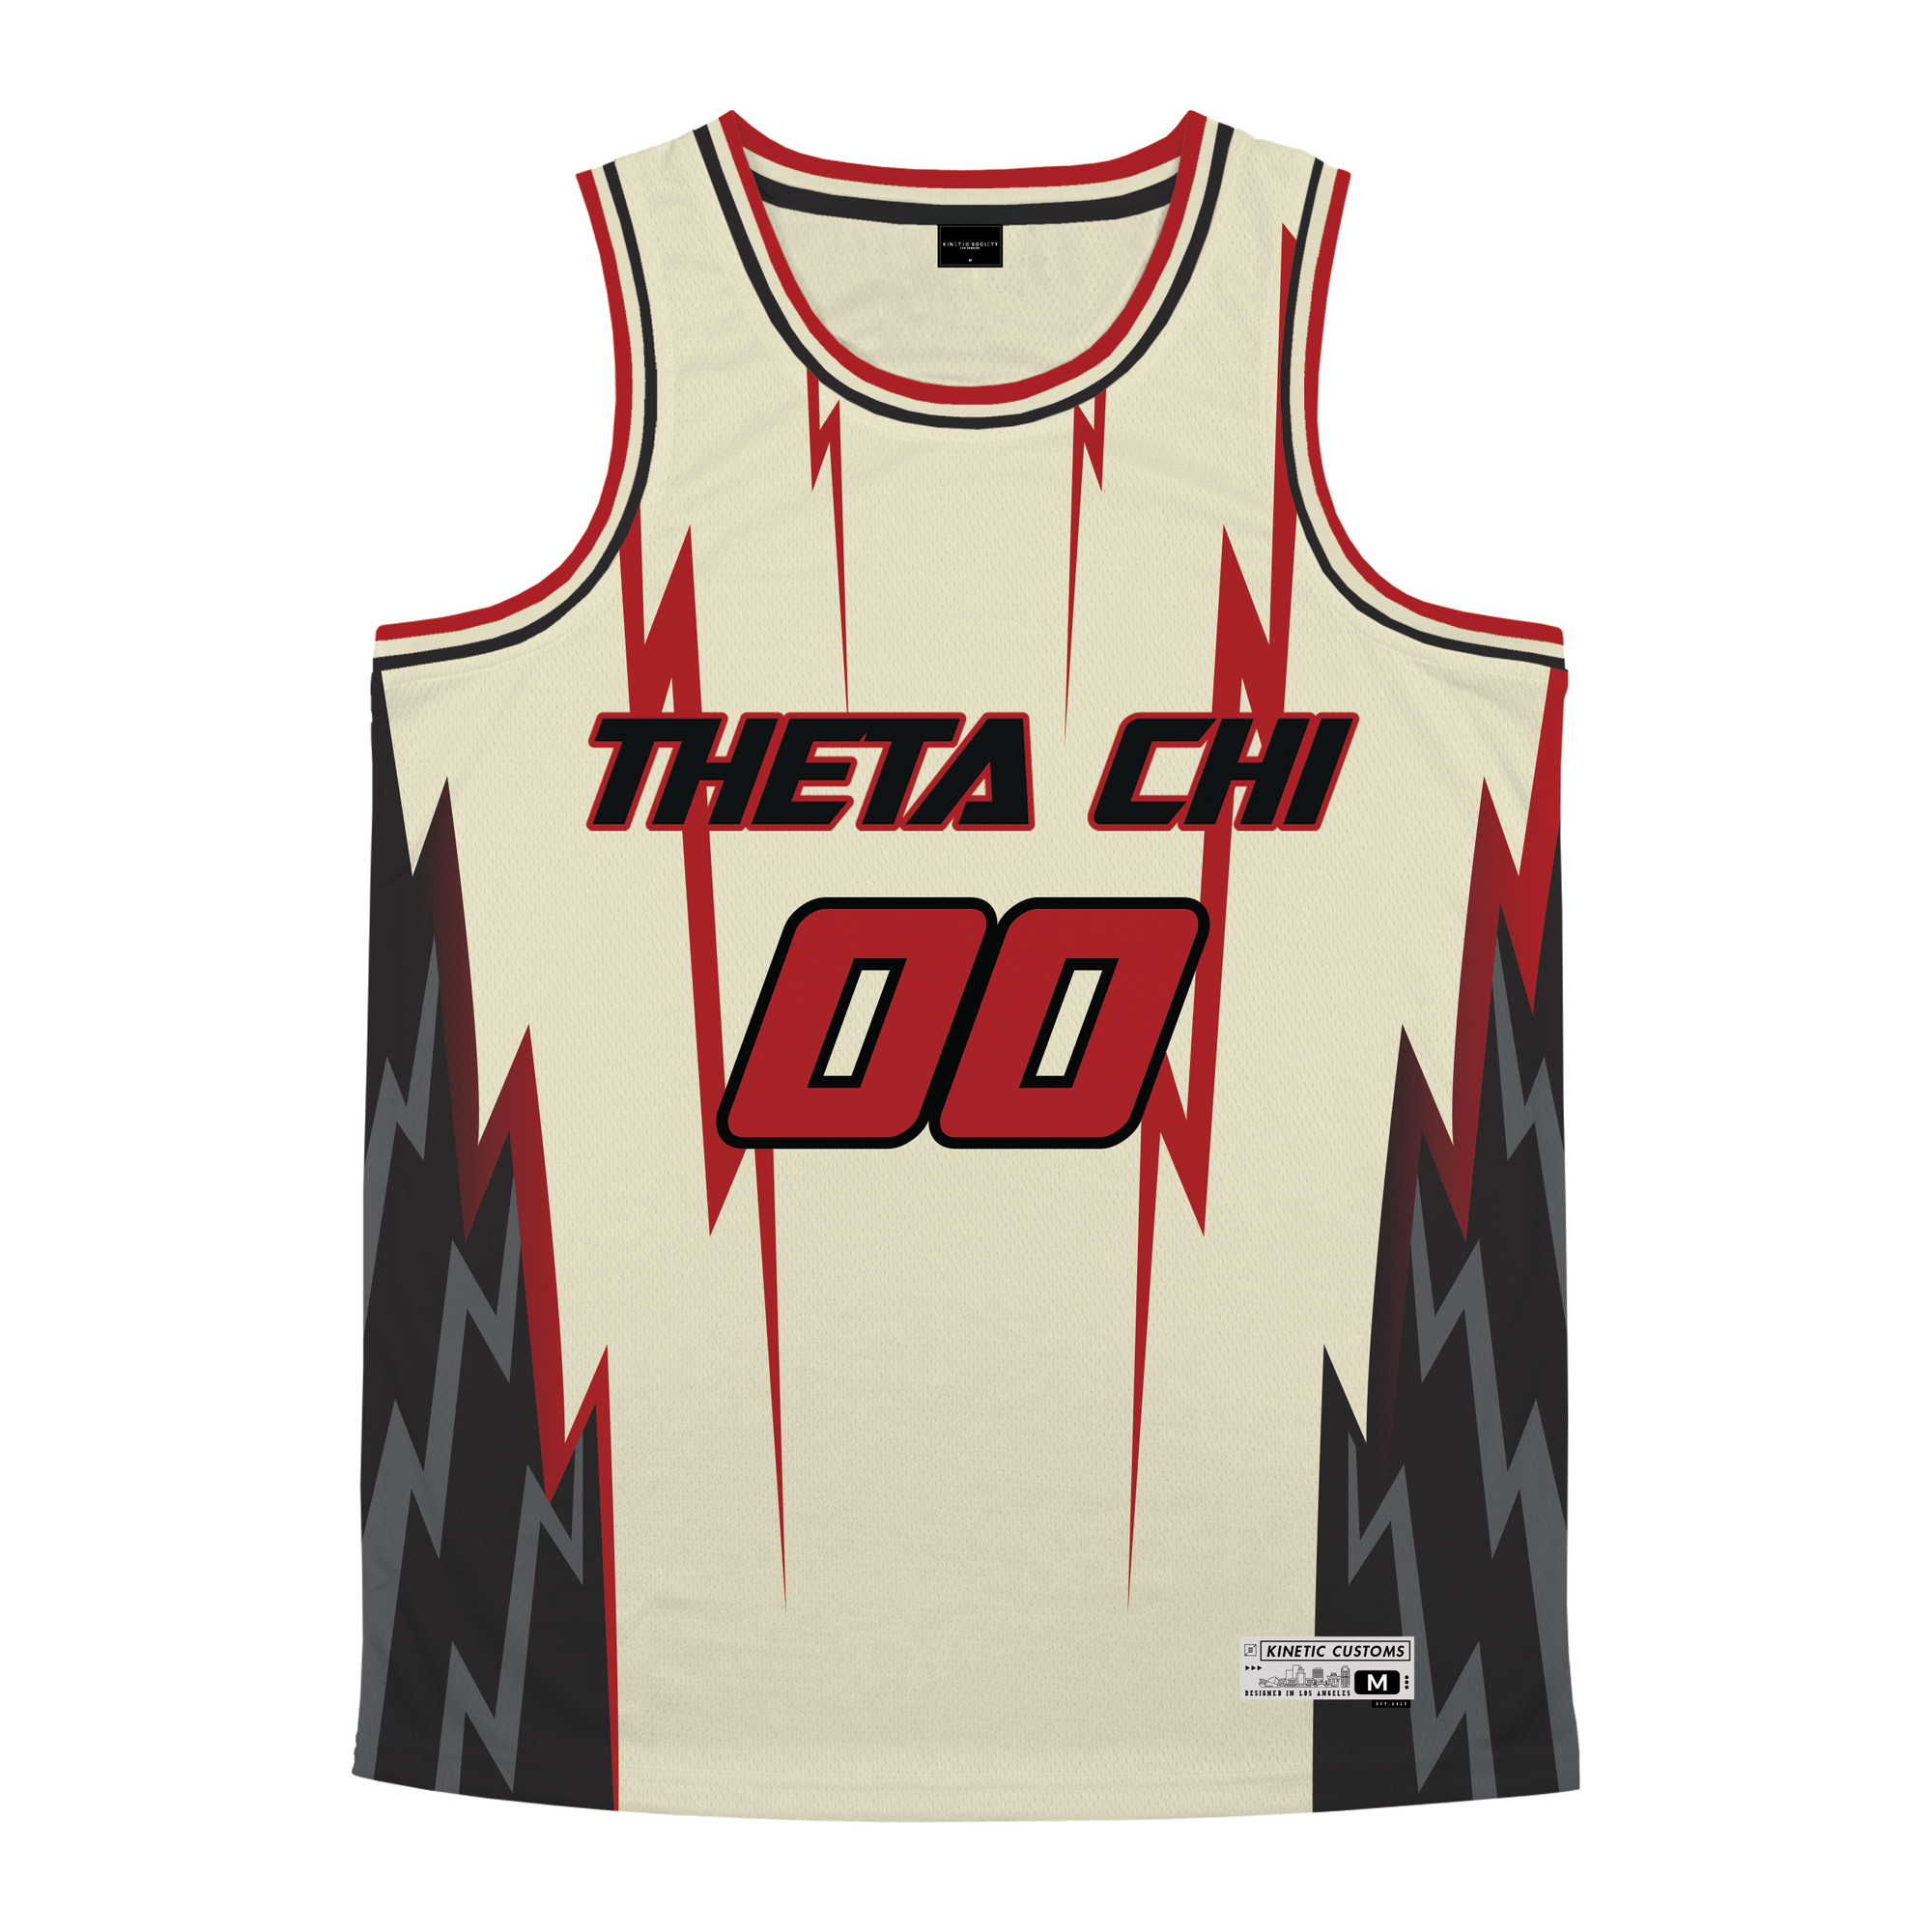 Theta Chi - Rapture Basketball Jersey